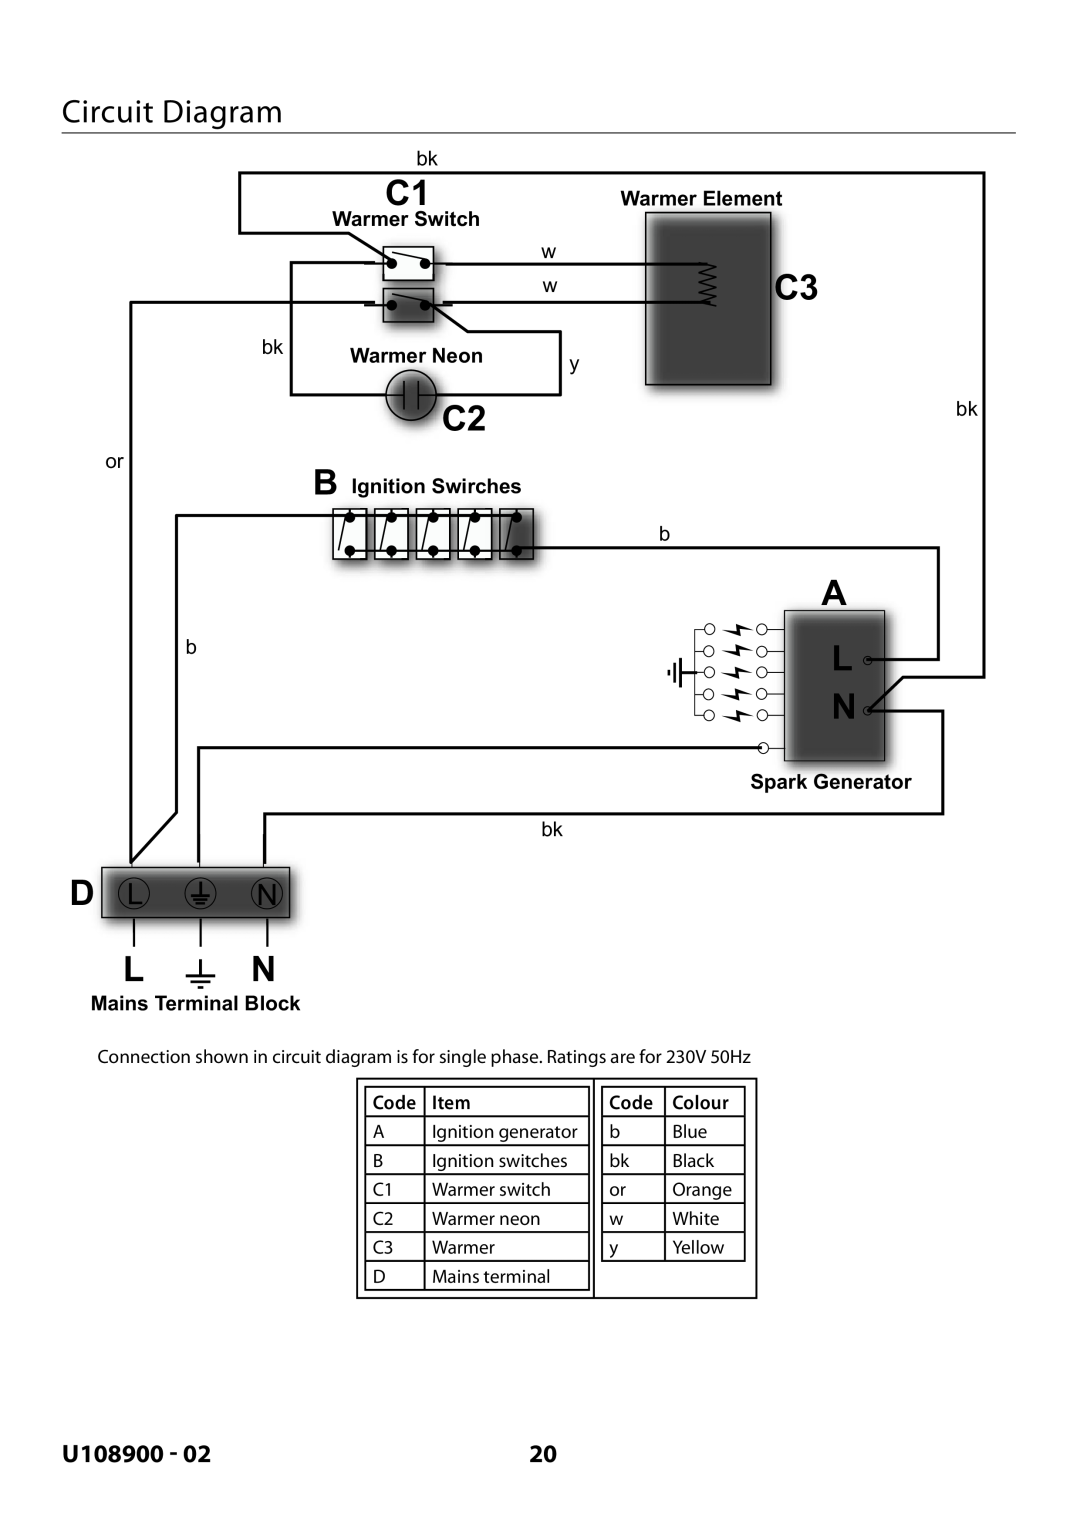 Rangemaster Toledo FS Hob Circuit Diagram, A L N, D L N, U108900, Warmer Element, Warmer Switch, Warmer Neon, Code, Colour 